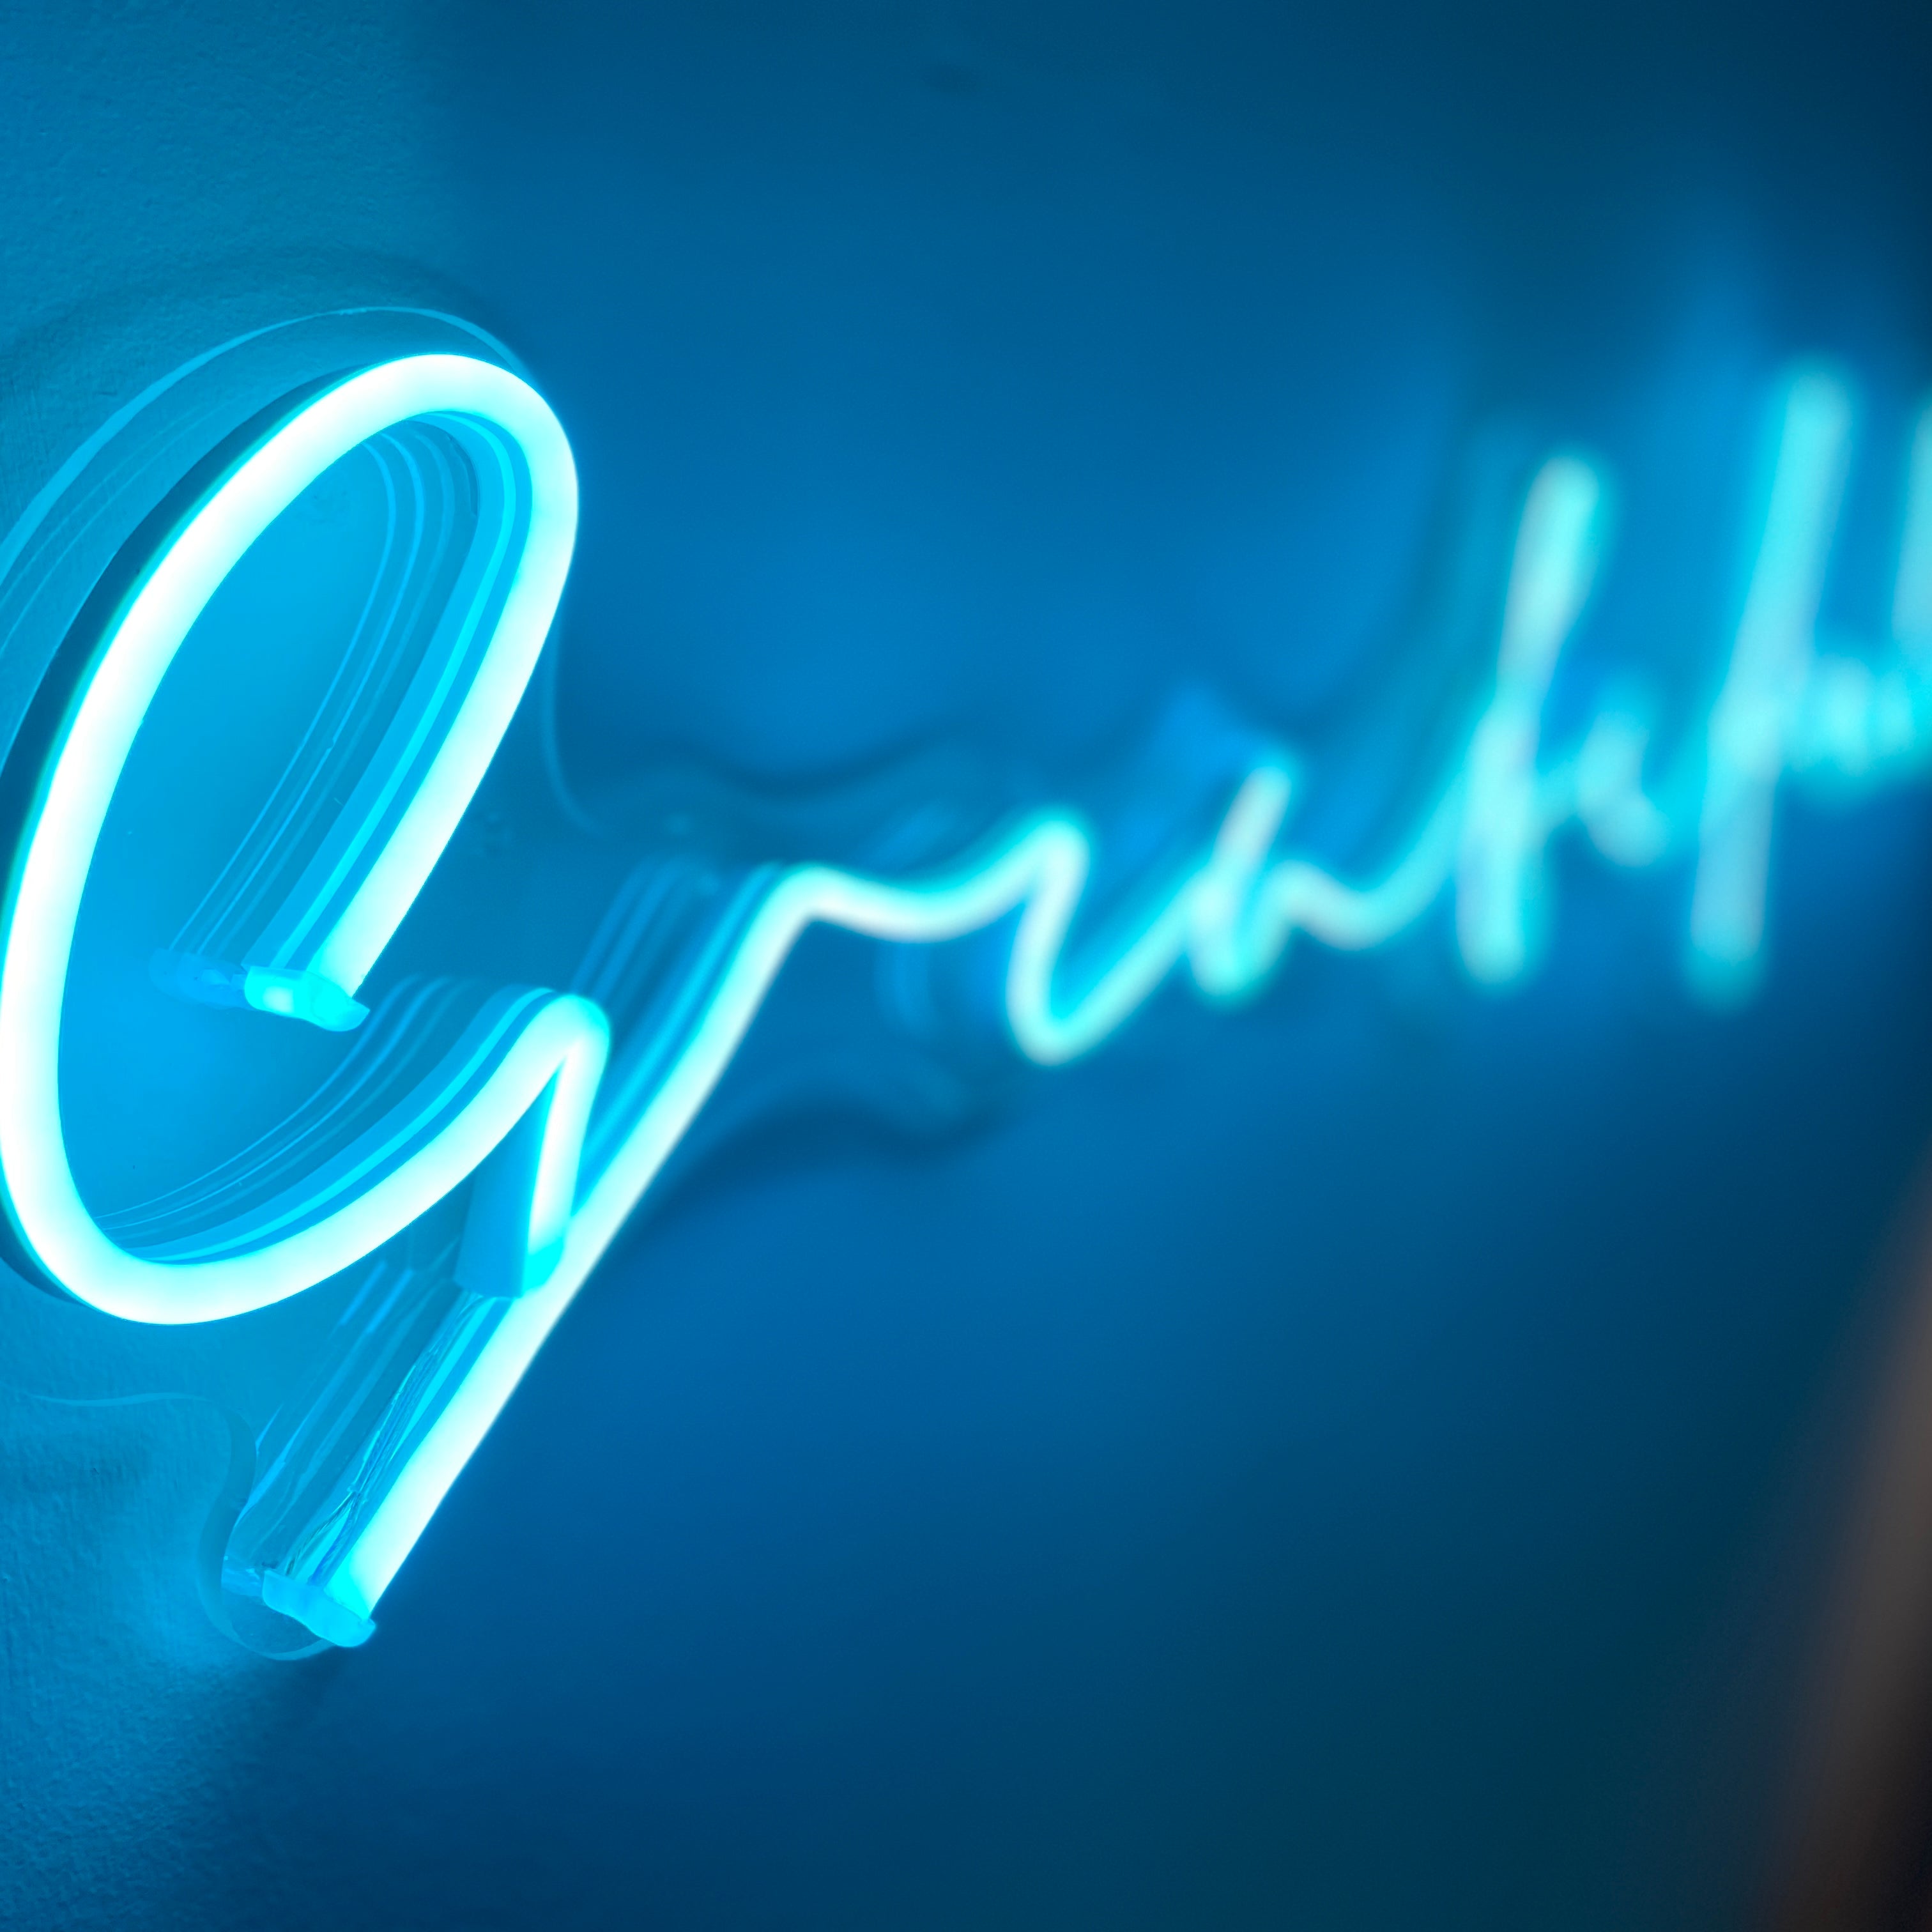 Grateful - Custom LED Neon-Style Word Sign